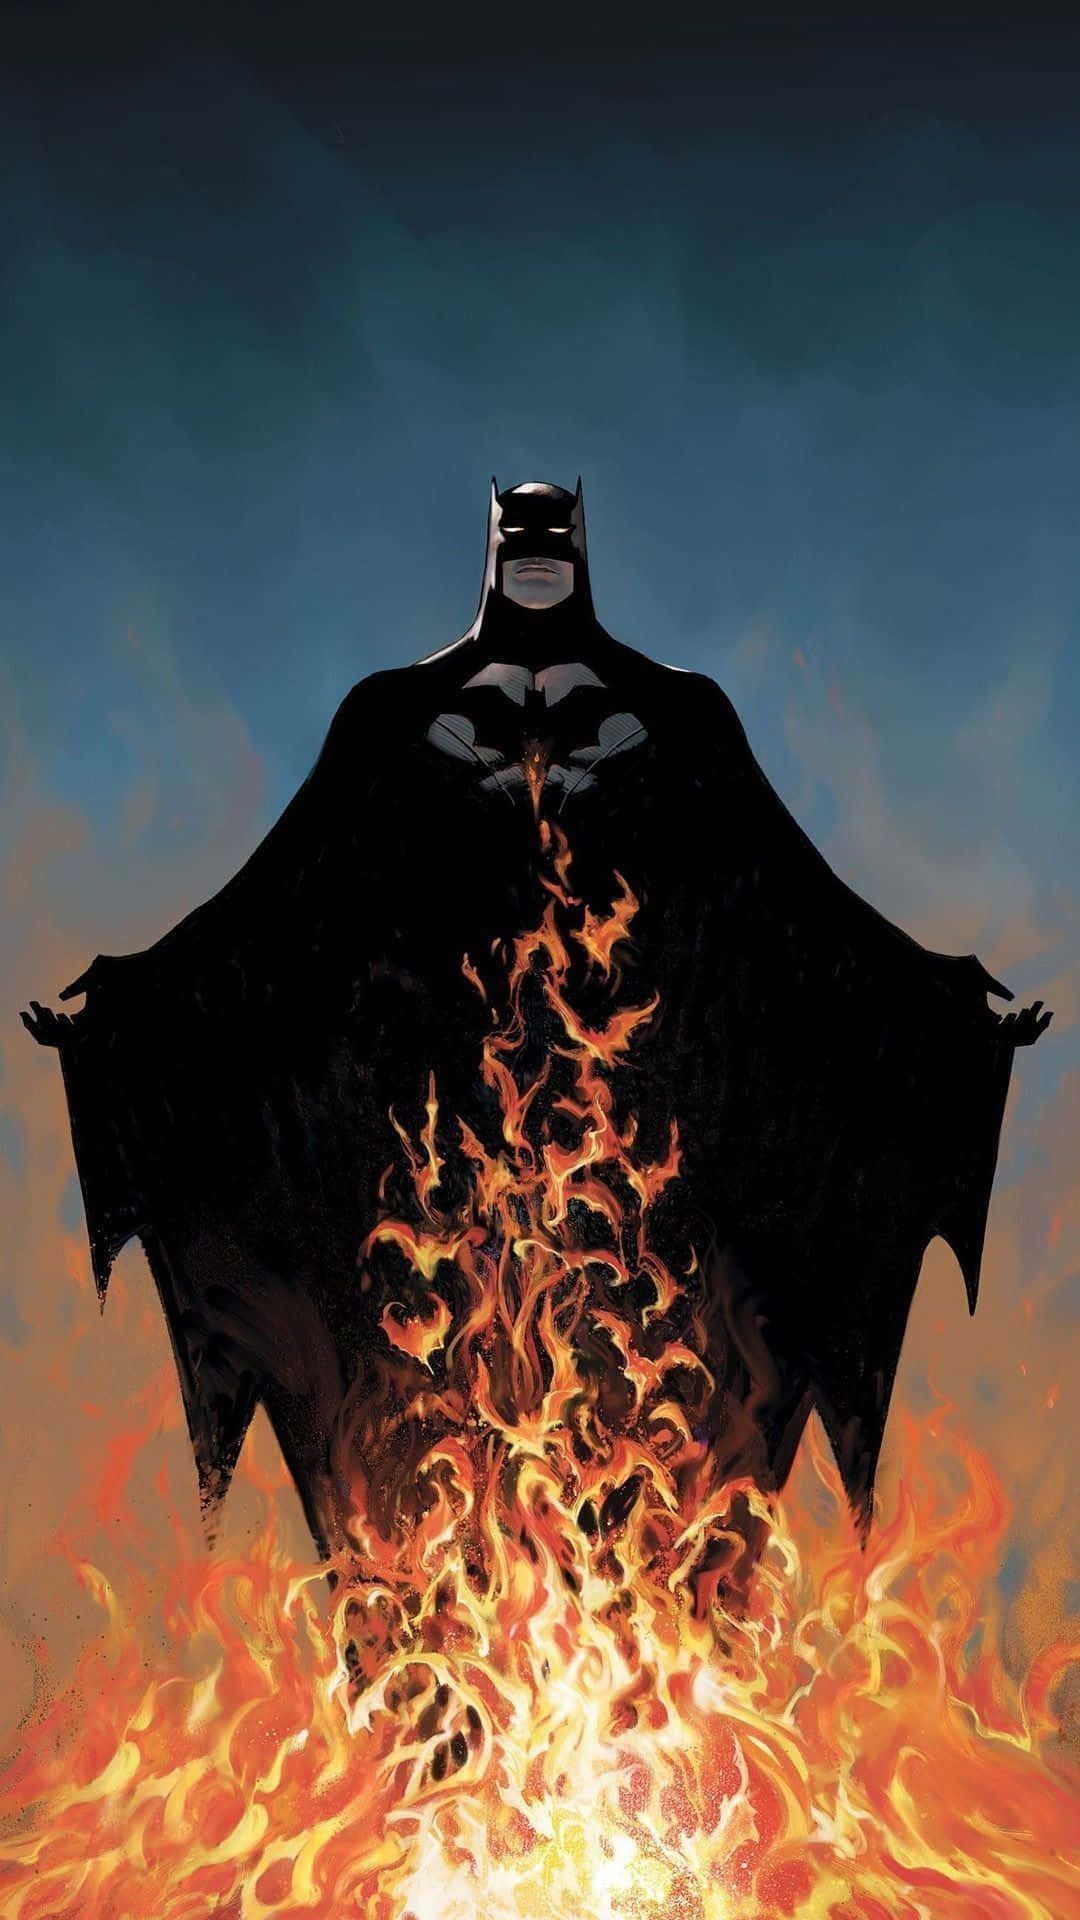 Batmanandroid Fire Digital Art: Batman Android Fire Digital Art Wallpaper